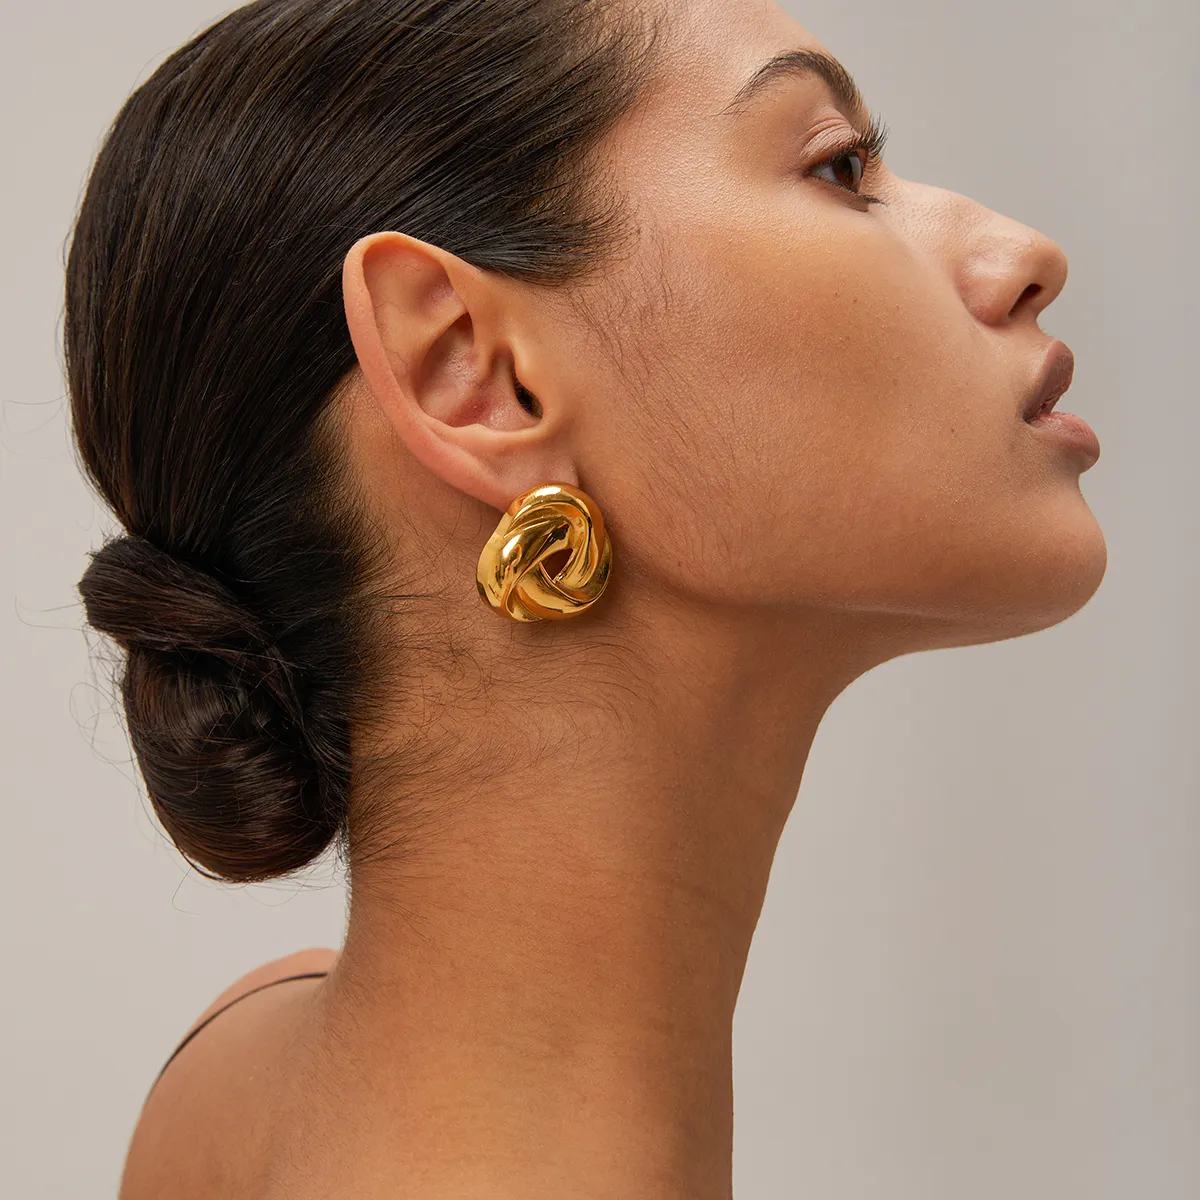 J&D Dainty Stainless Steel Small Gold Earrings Designs For Women Jewelry Vintage Braided Stud Earrings